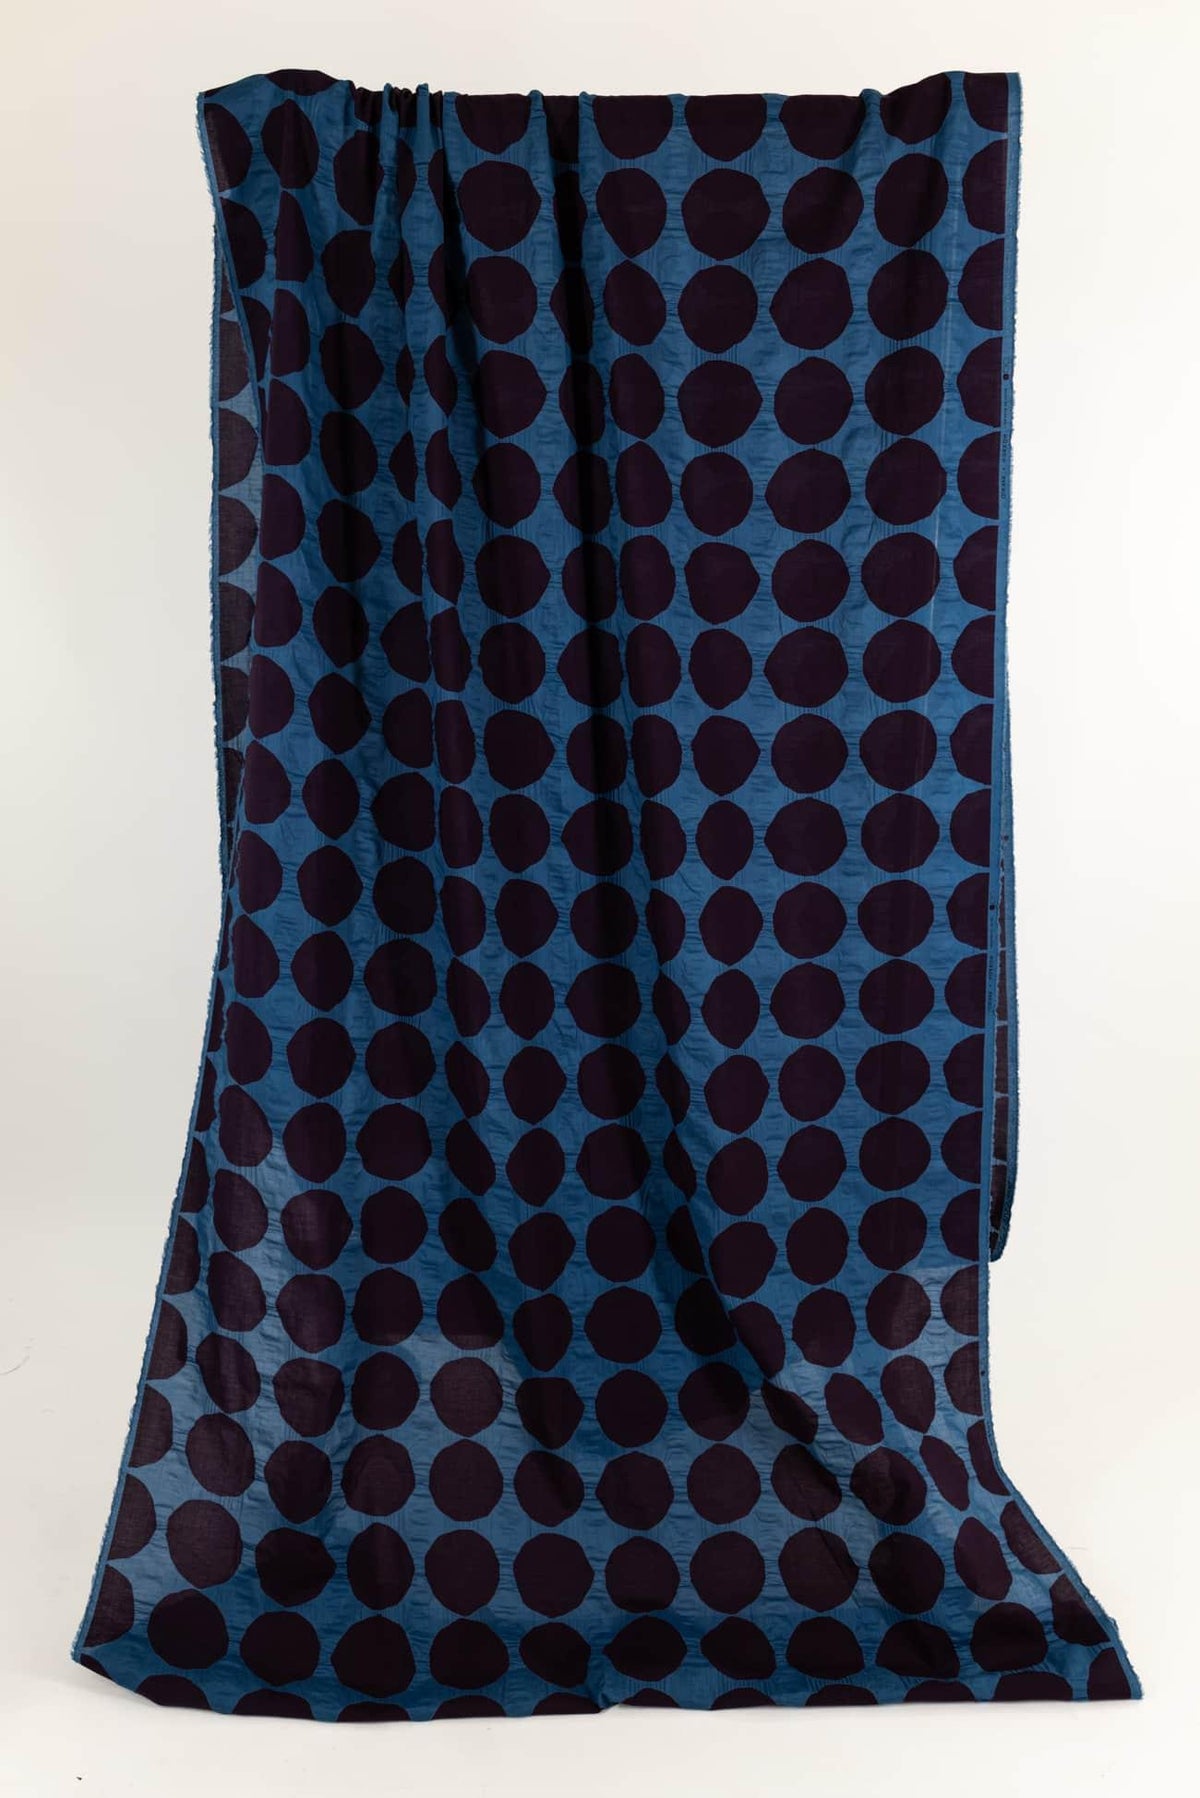 Kenji Dot Japanese Cotton Plisse Woven - Marcy Tilton Fabrics